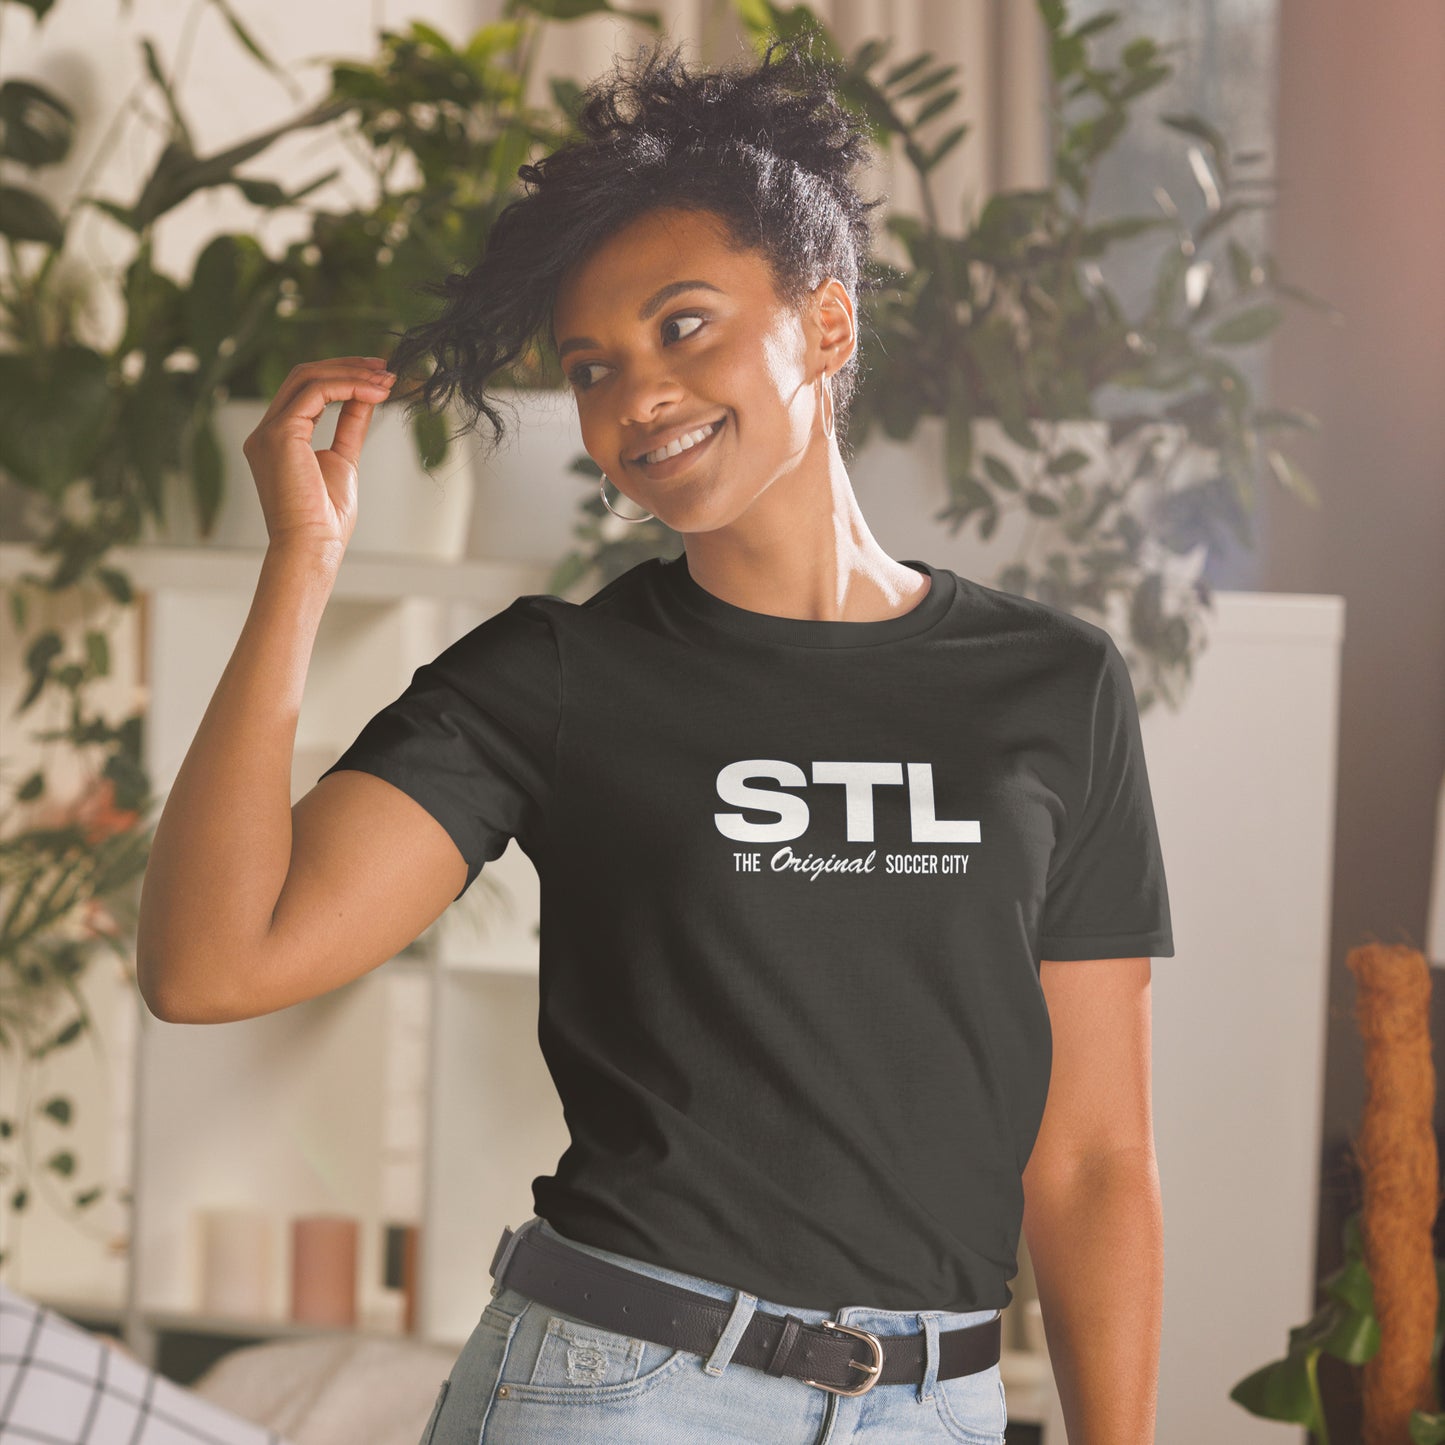 STL The Original Soccer City. Unisex Soft Cotton Short-Sleeve Unisex T-Shirt